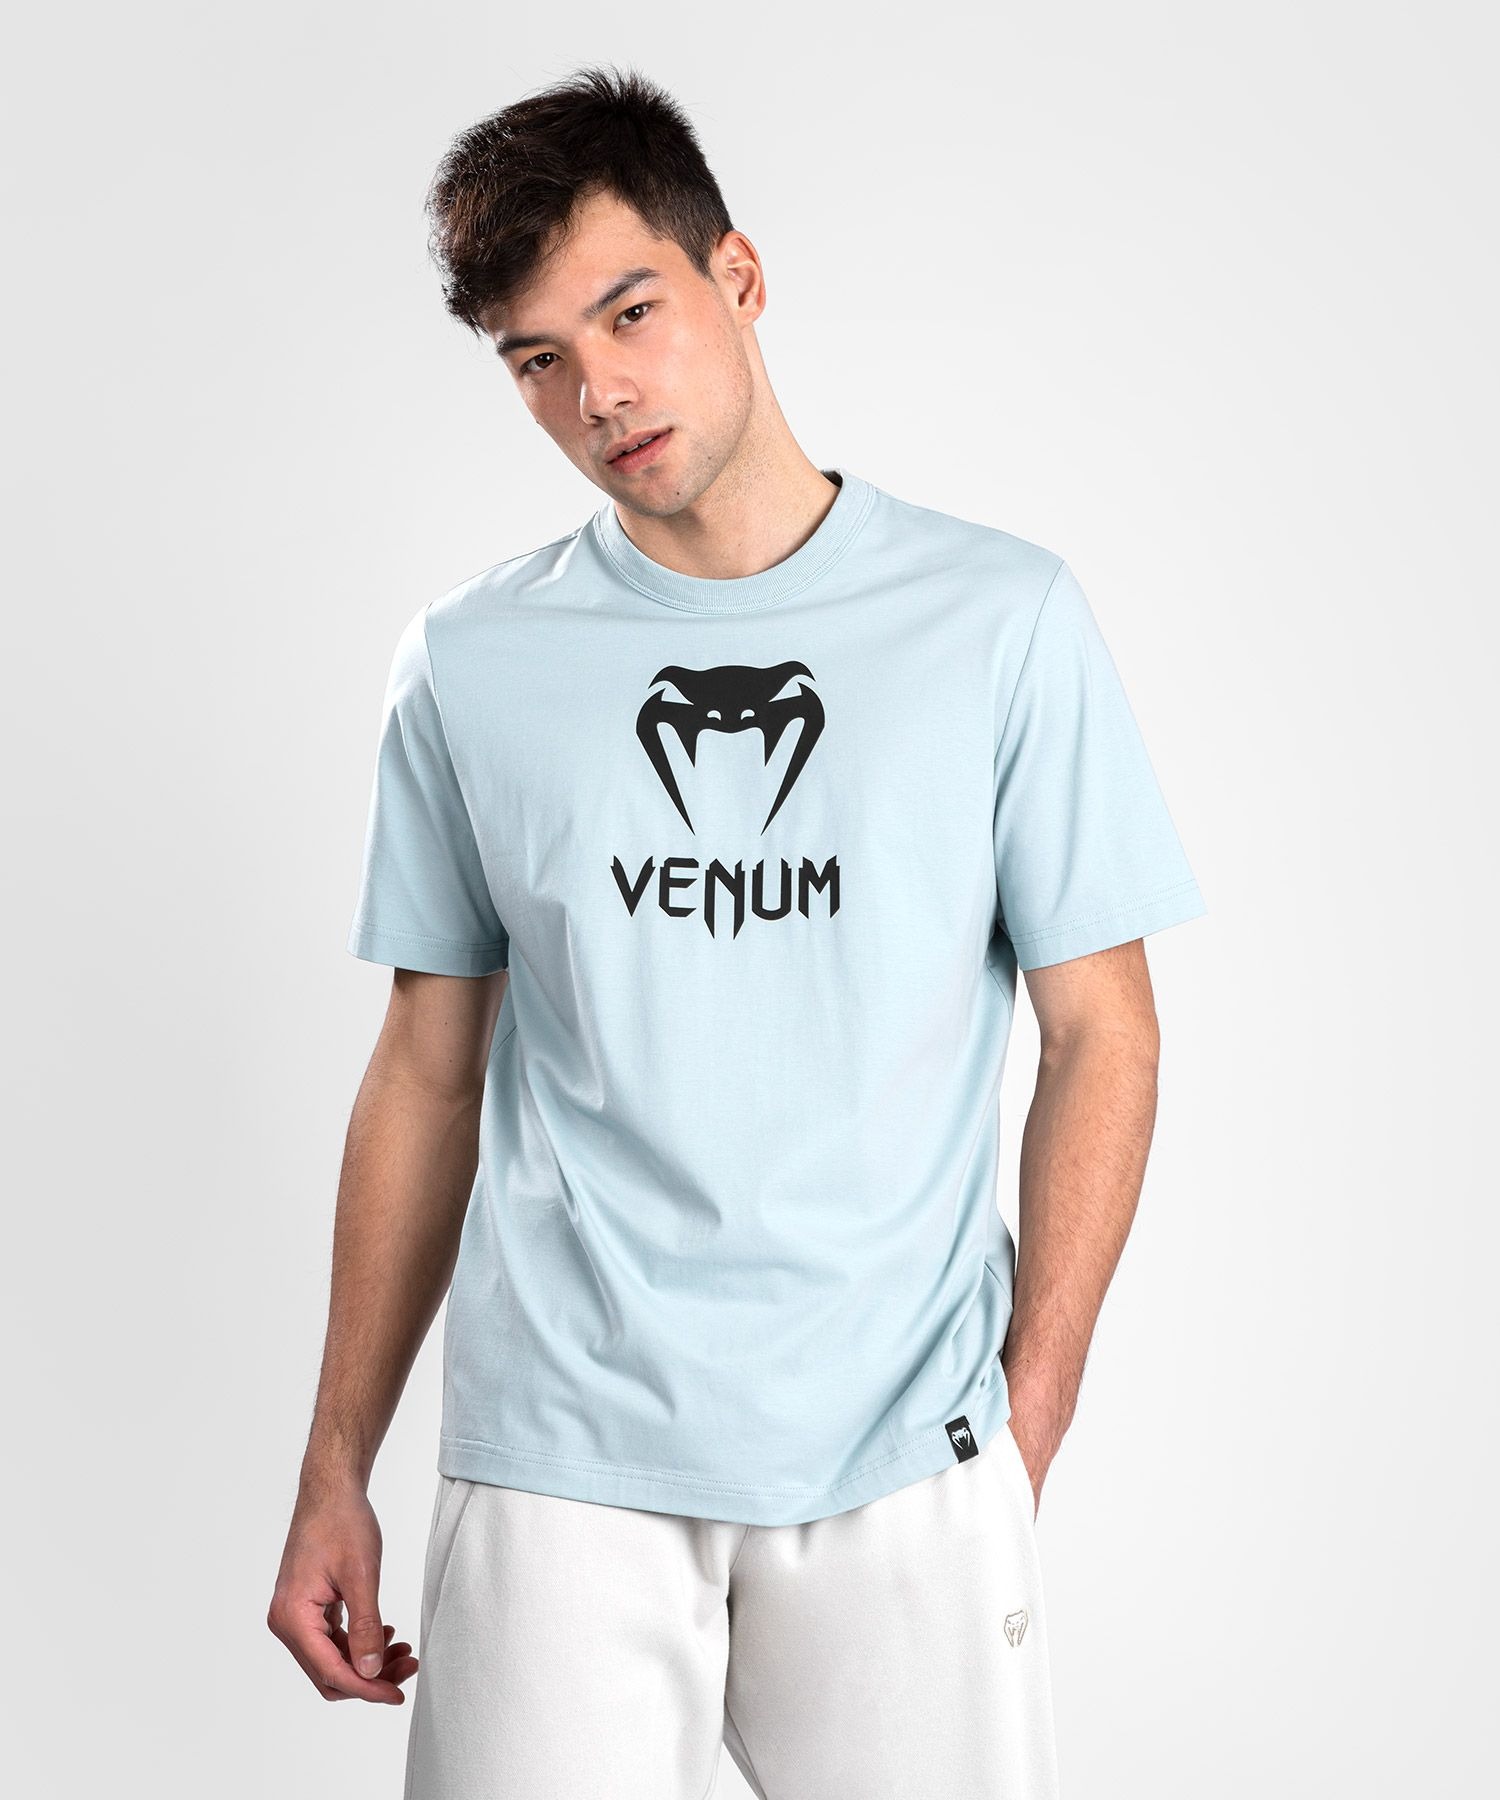 T-shirt Venum Classic Bleu clair - Noir